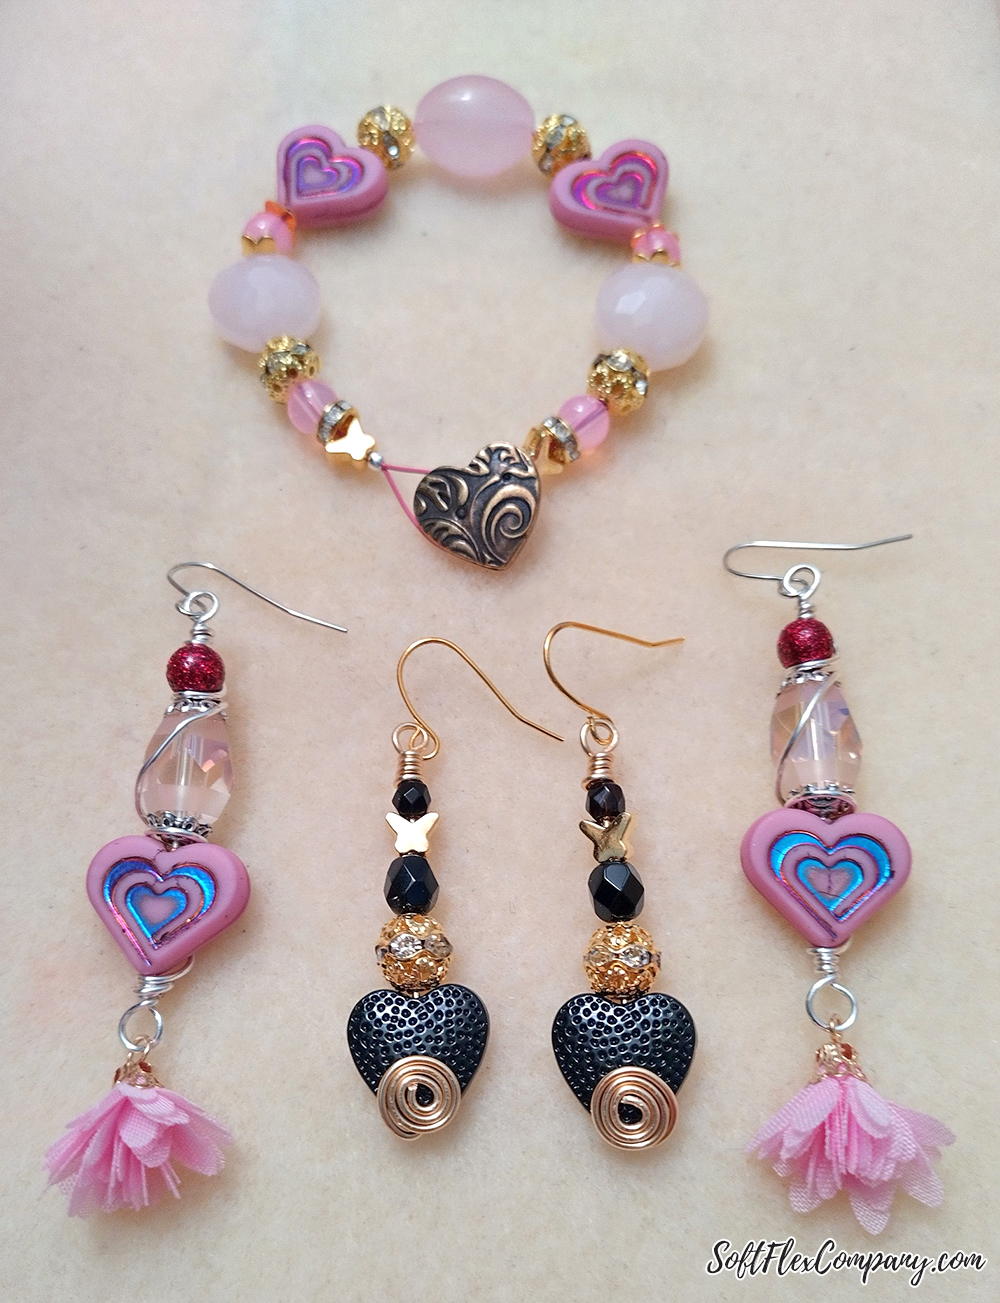 Lovebug Jewelry Design by Gale Loder